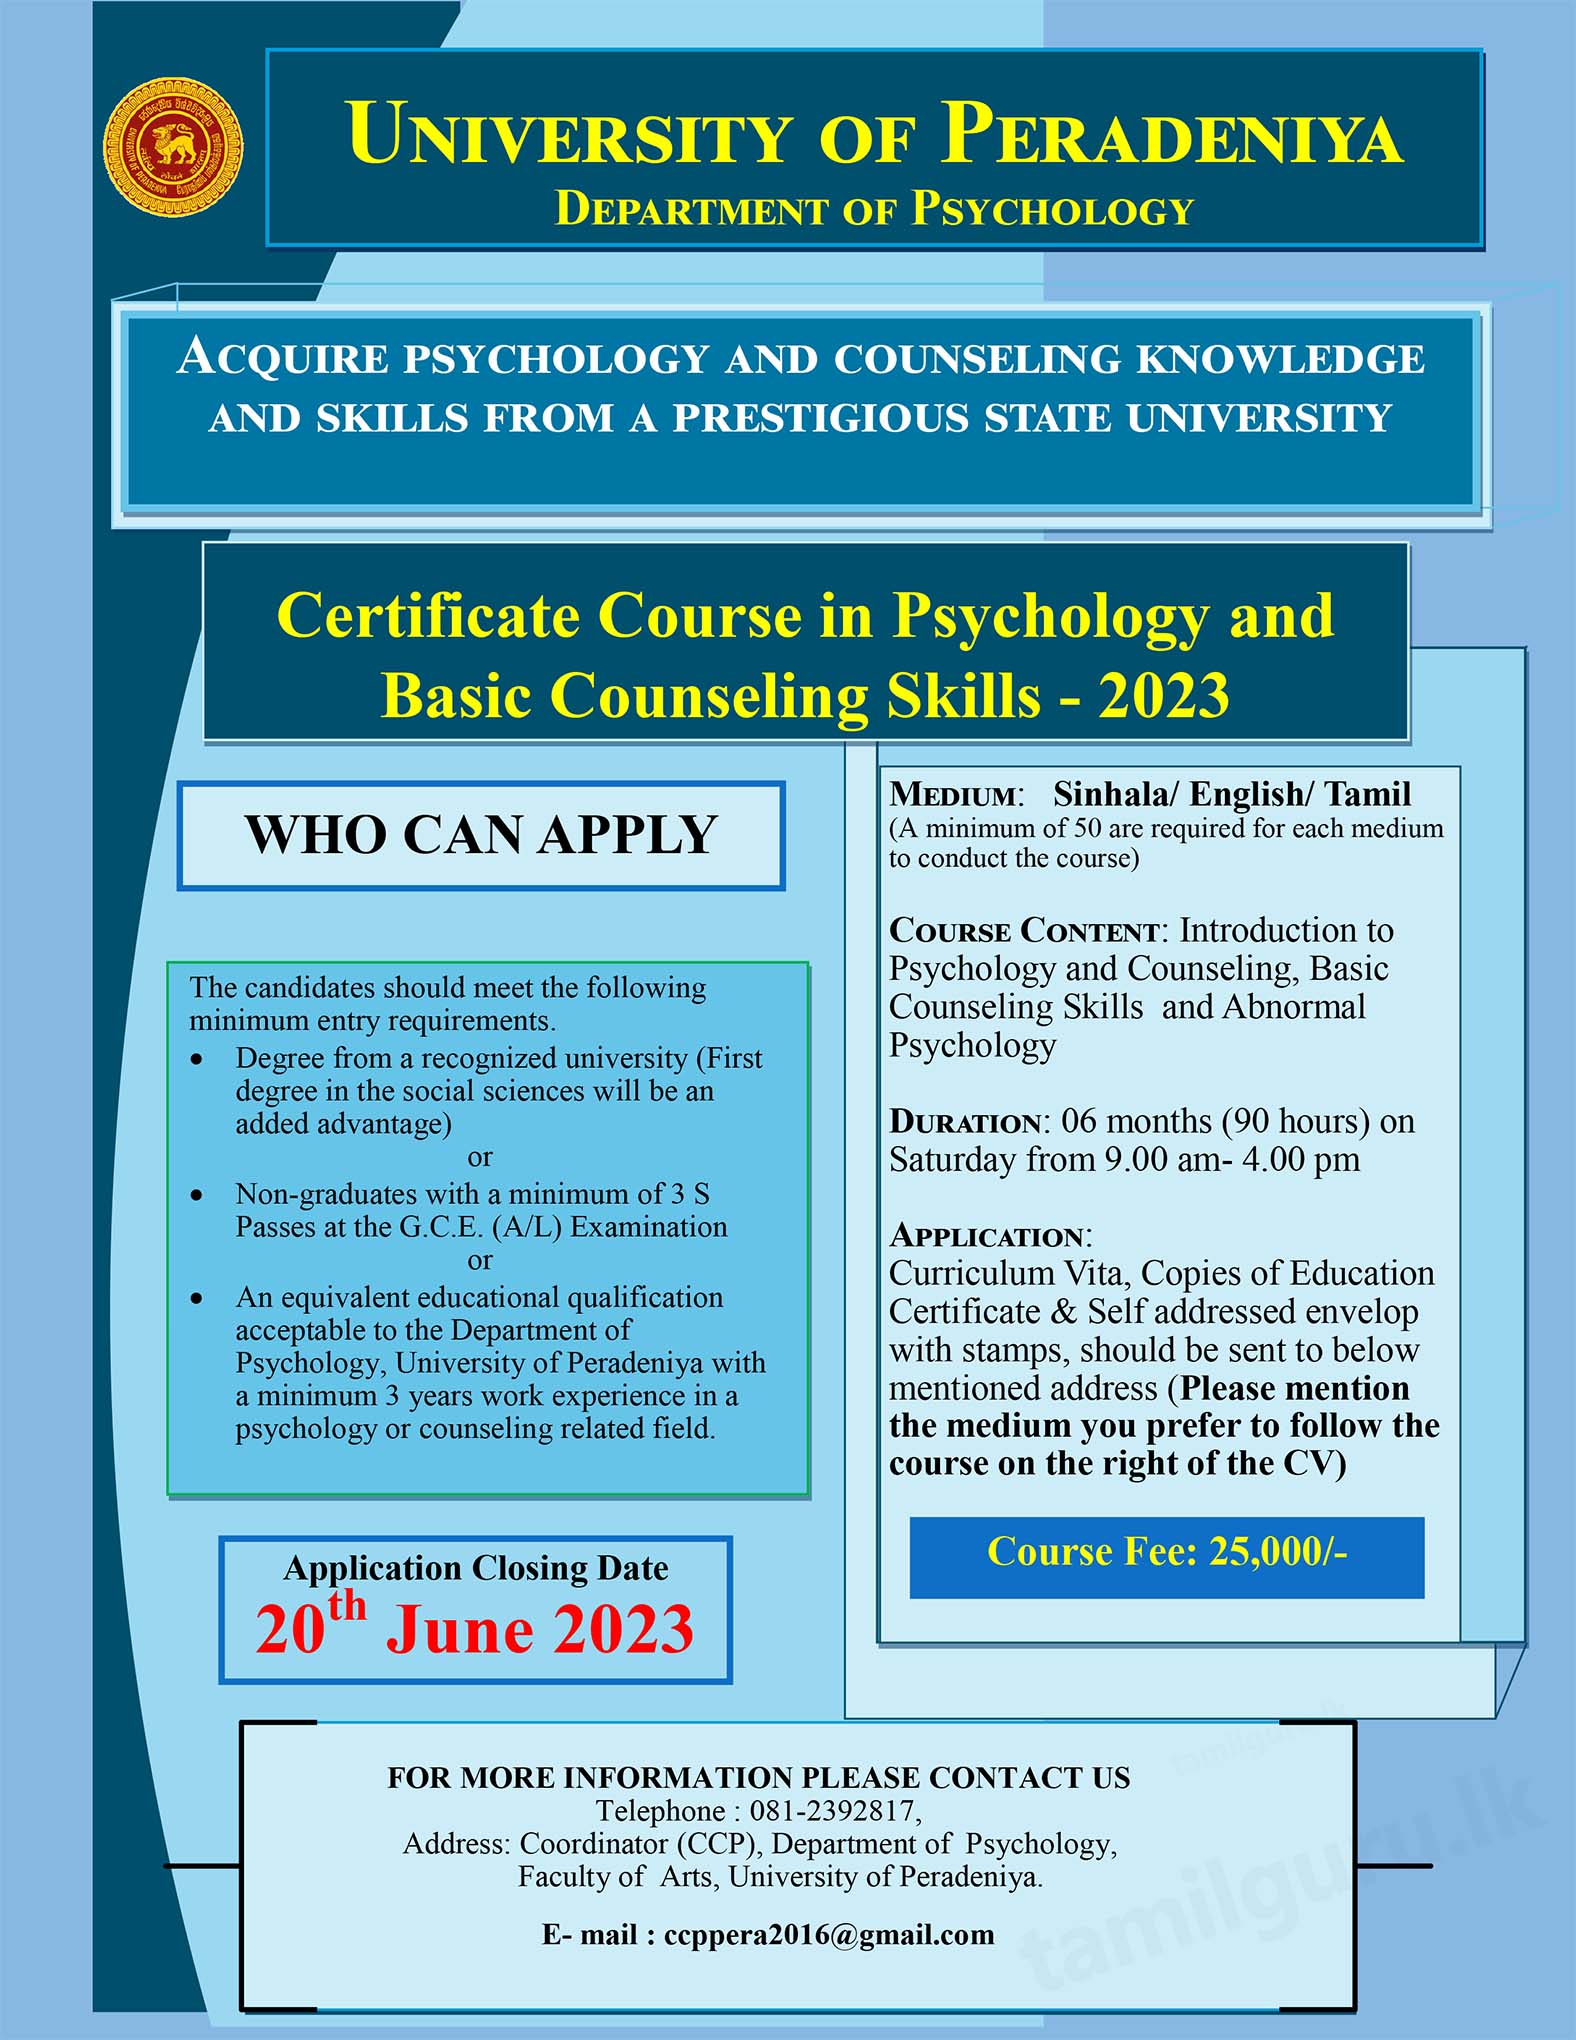 Certificate Course in Psychology & Basic Counseling Skills 2023 - University of Peradeniya